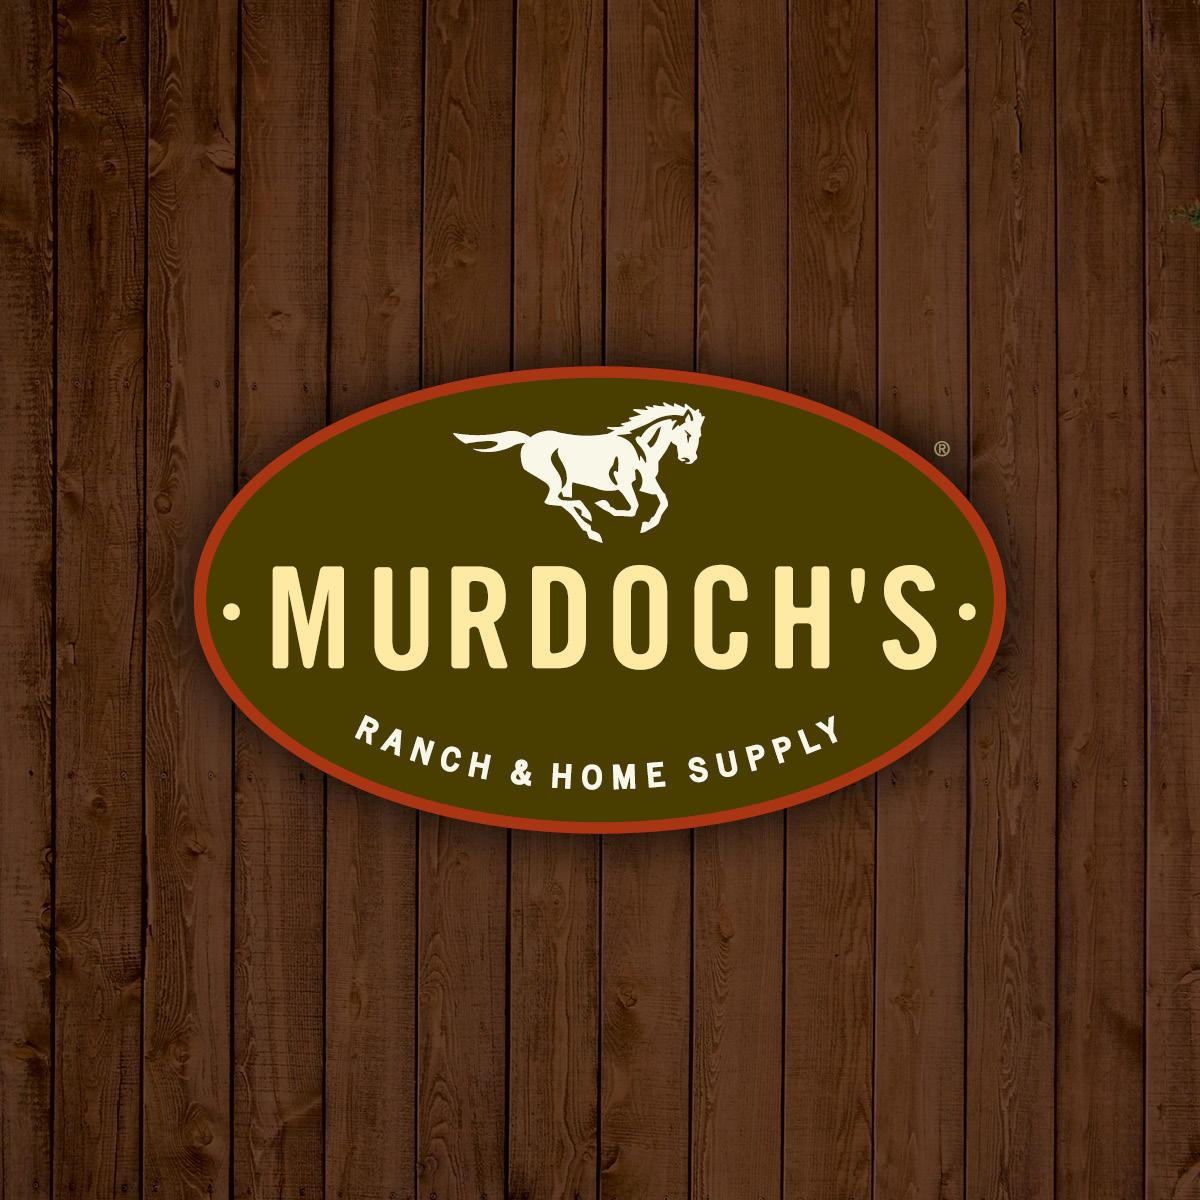 Murdoch's Ranch & Home Supply - Victoria, TX 77904 - (361)465-7570 | ShowMeLocal.com